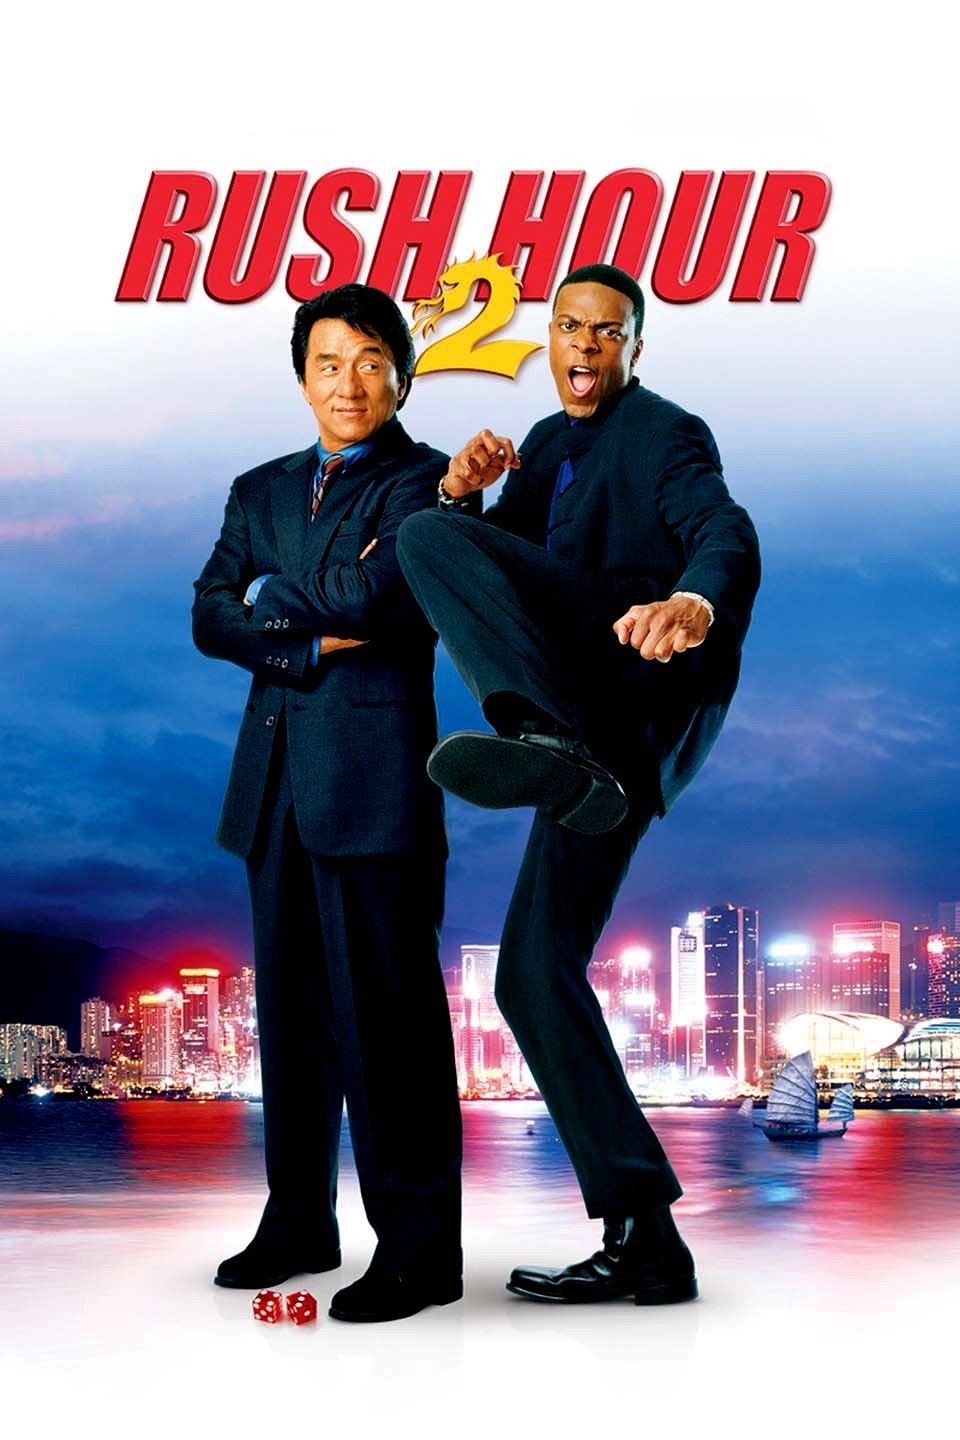 [MINI Super-HQ] Rush Hour 2 (2001) คู่ใหญ่ฟัดเต็มสปีด ภาค 2 [1080p] [พากย์ไทย 5.1 + อังกฤษ DTS] [บรรยายไทย + อังกฤษ] [เสียงไทย + ซับไทย] [ONE2UP]